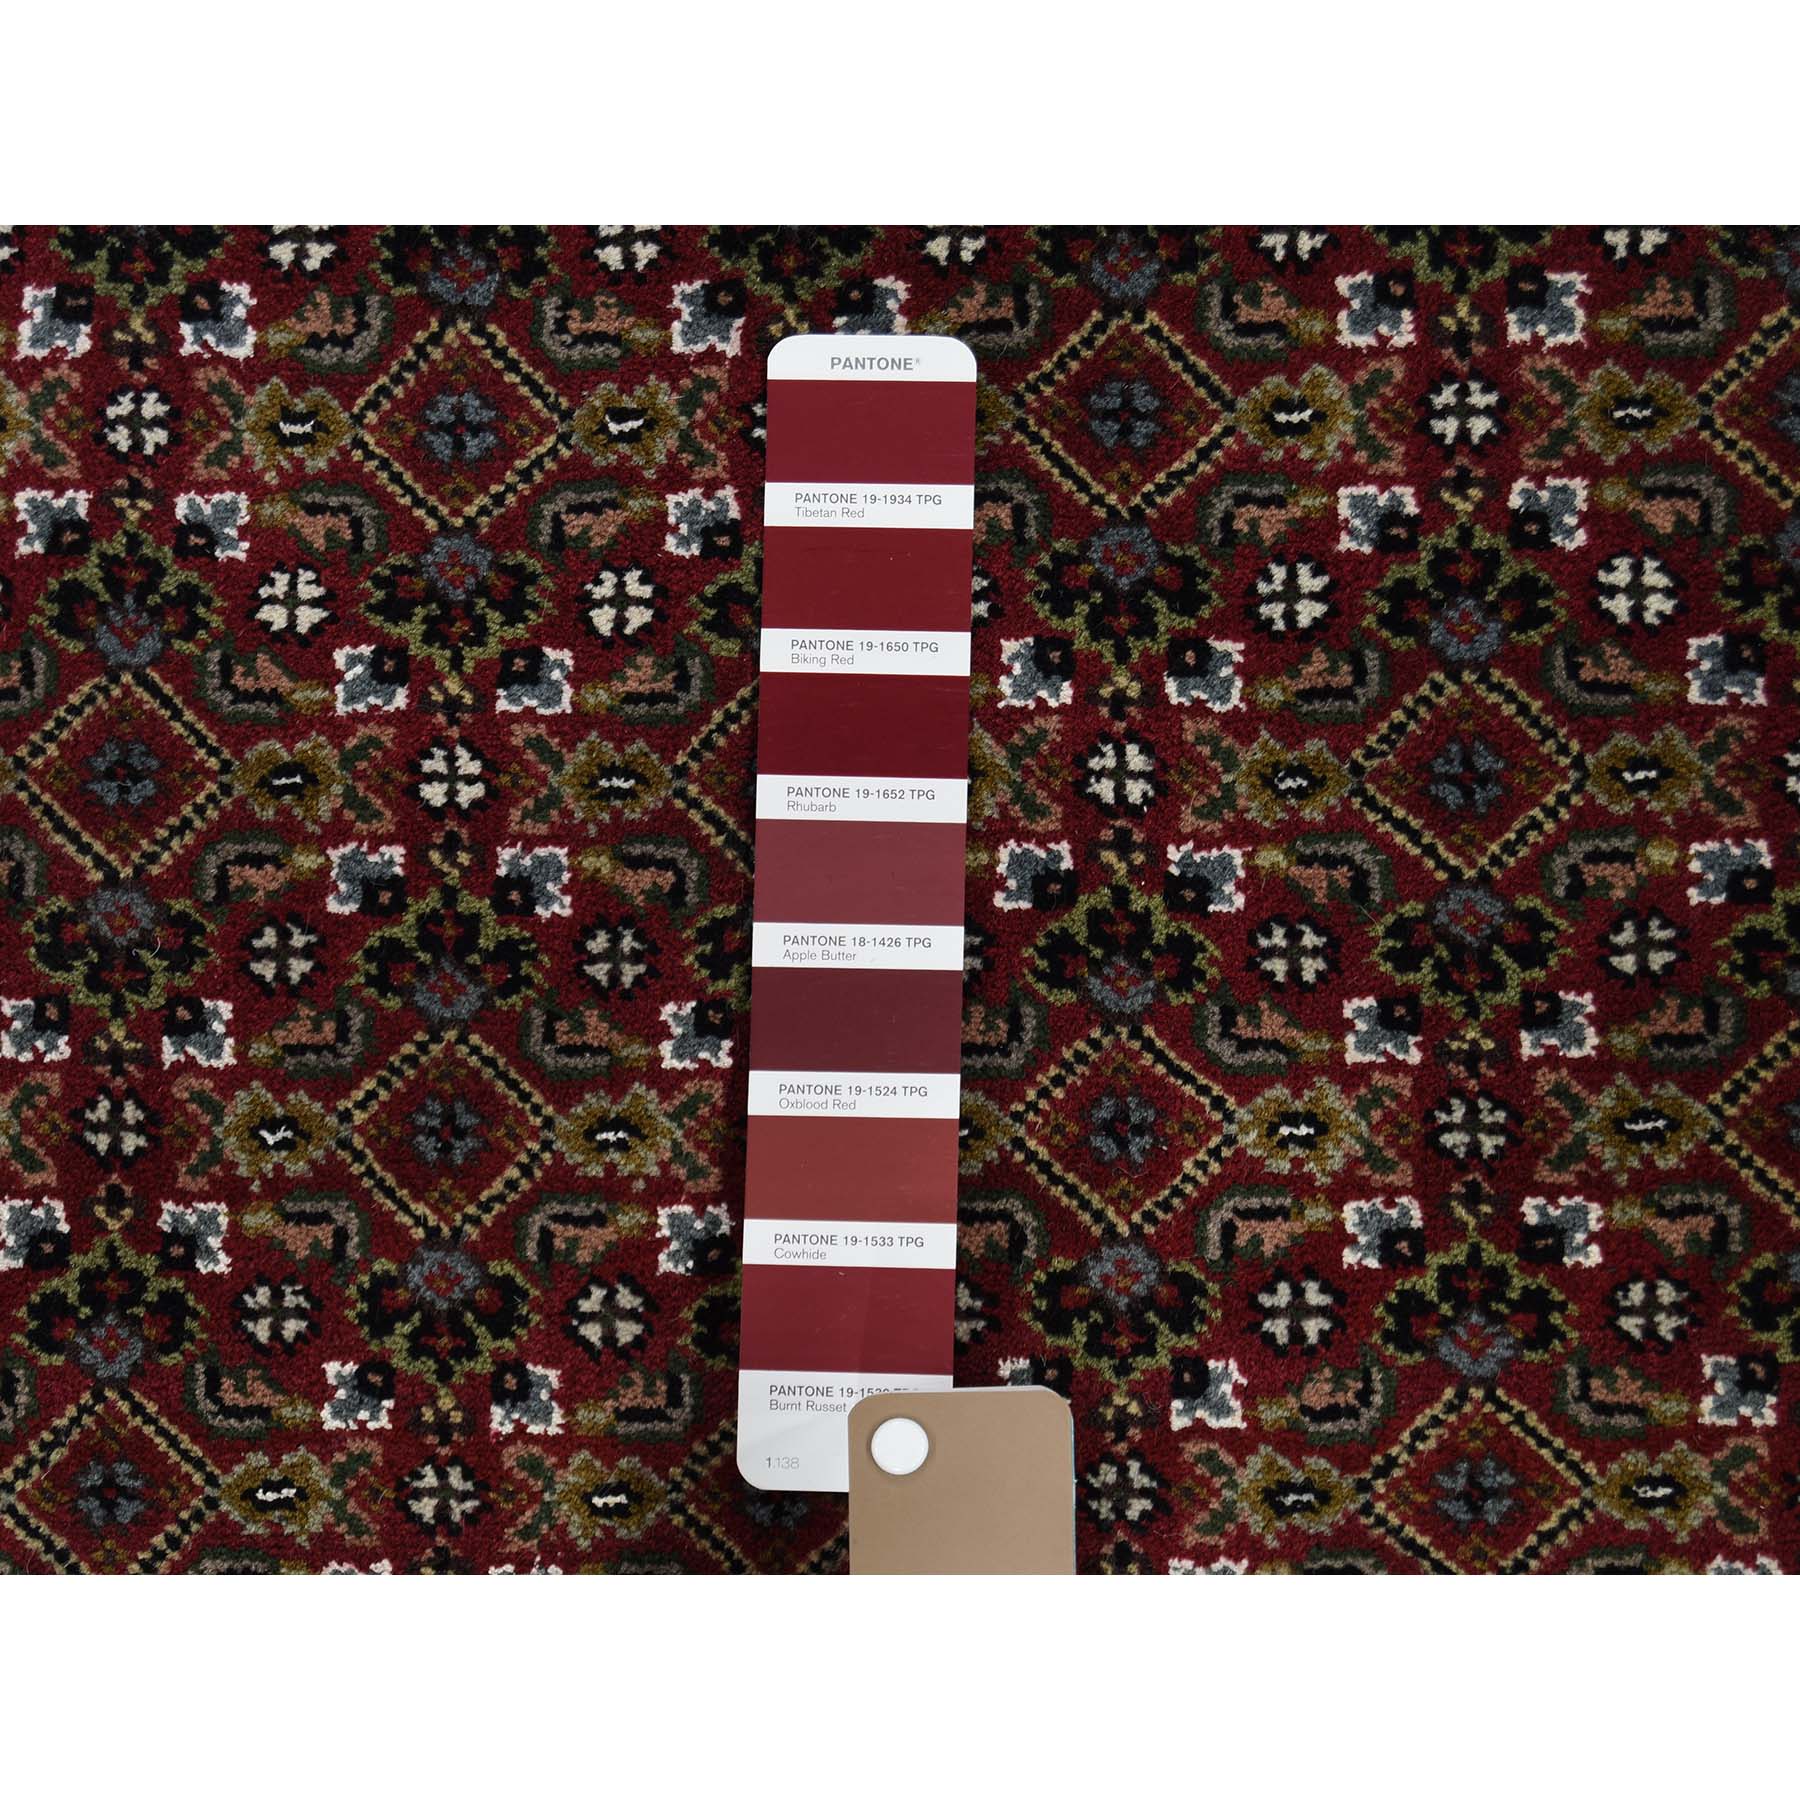 10-x16- Tabriz Mahi Oversize Wool and Silk Hand Knotted Oriental Rug 